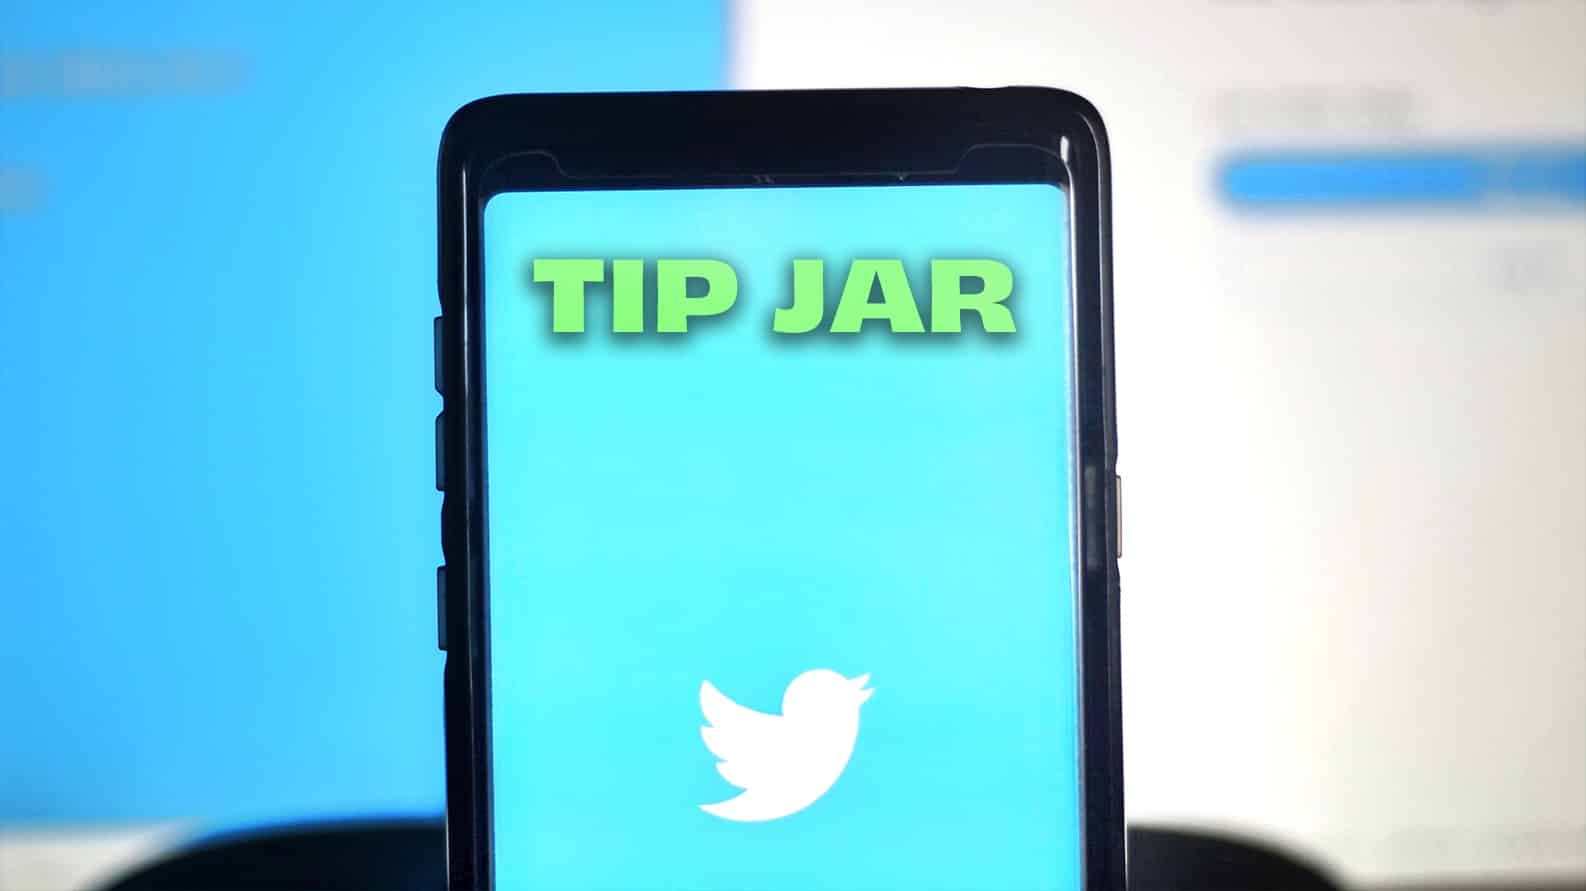 Tip jar Twitter